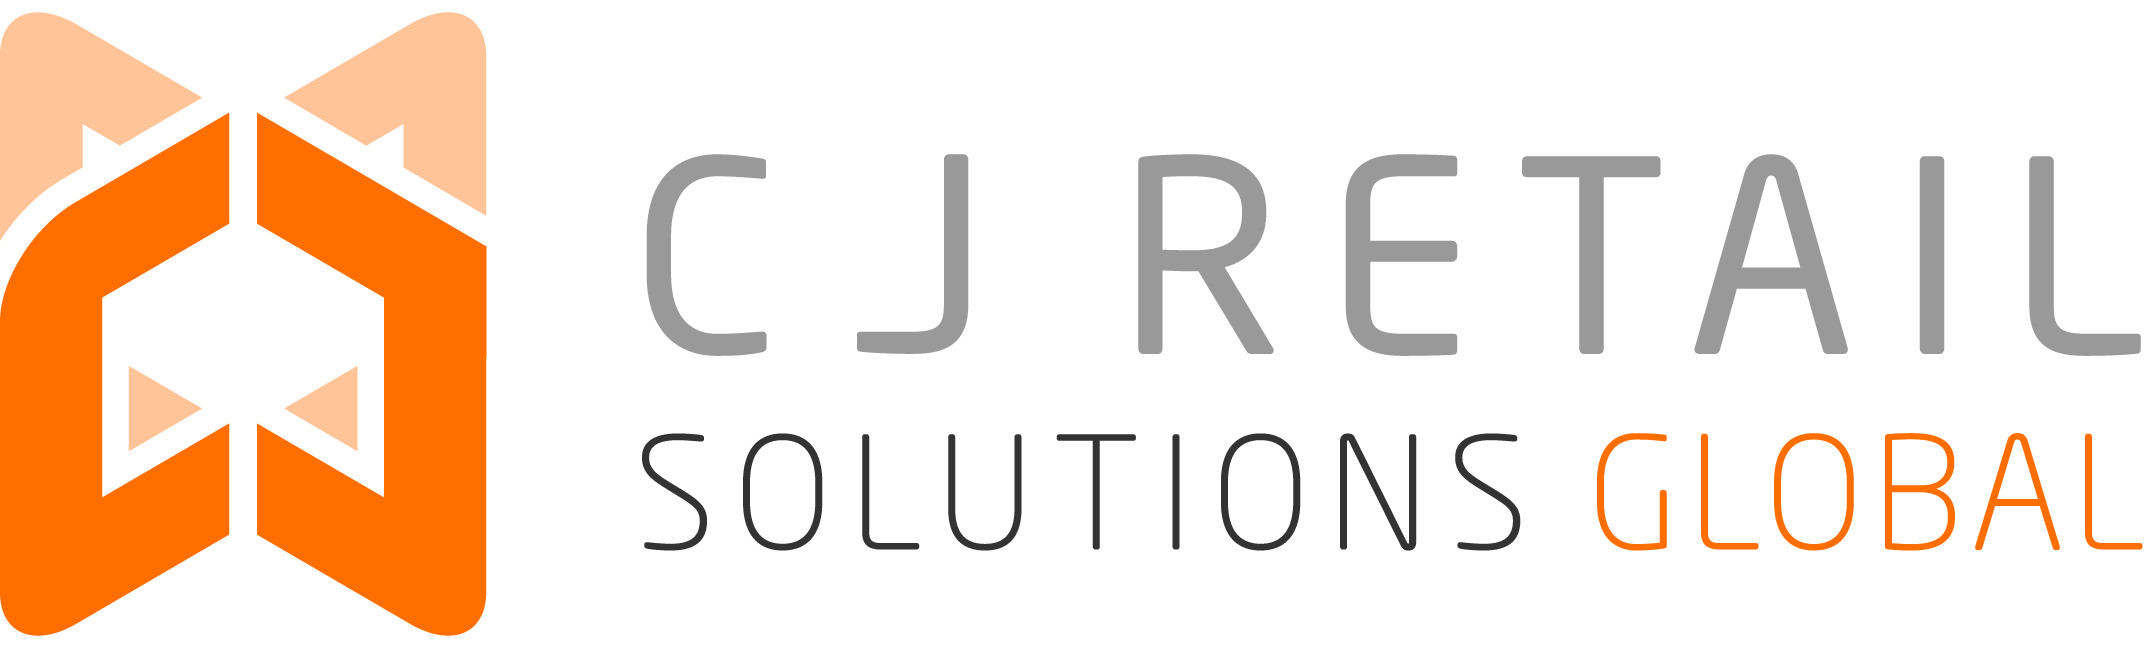 CJ Retail Solutions Global Logo